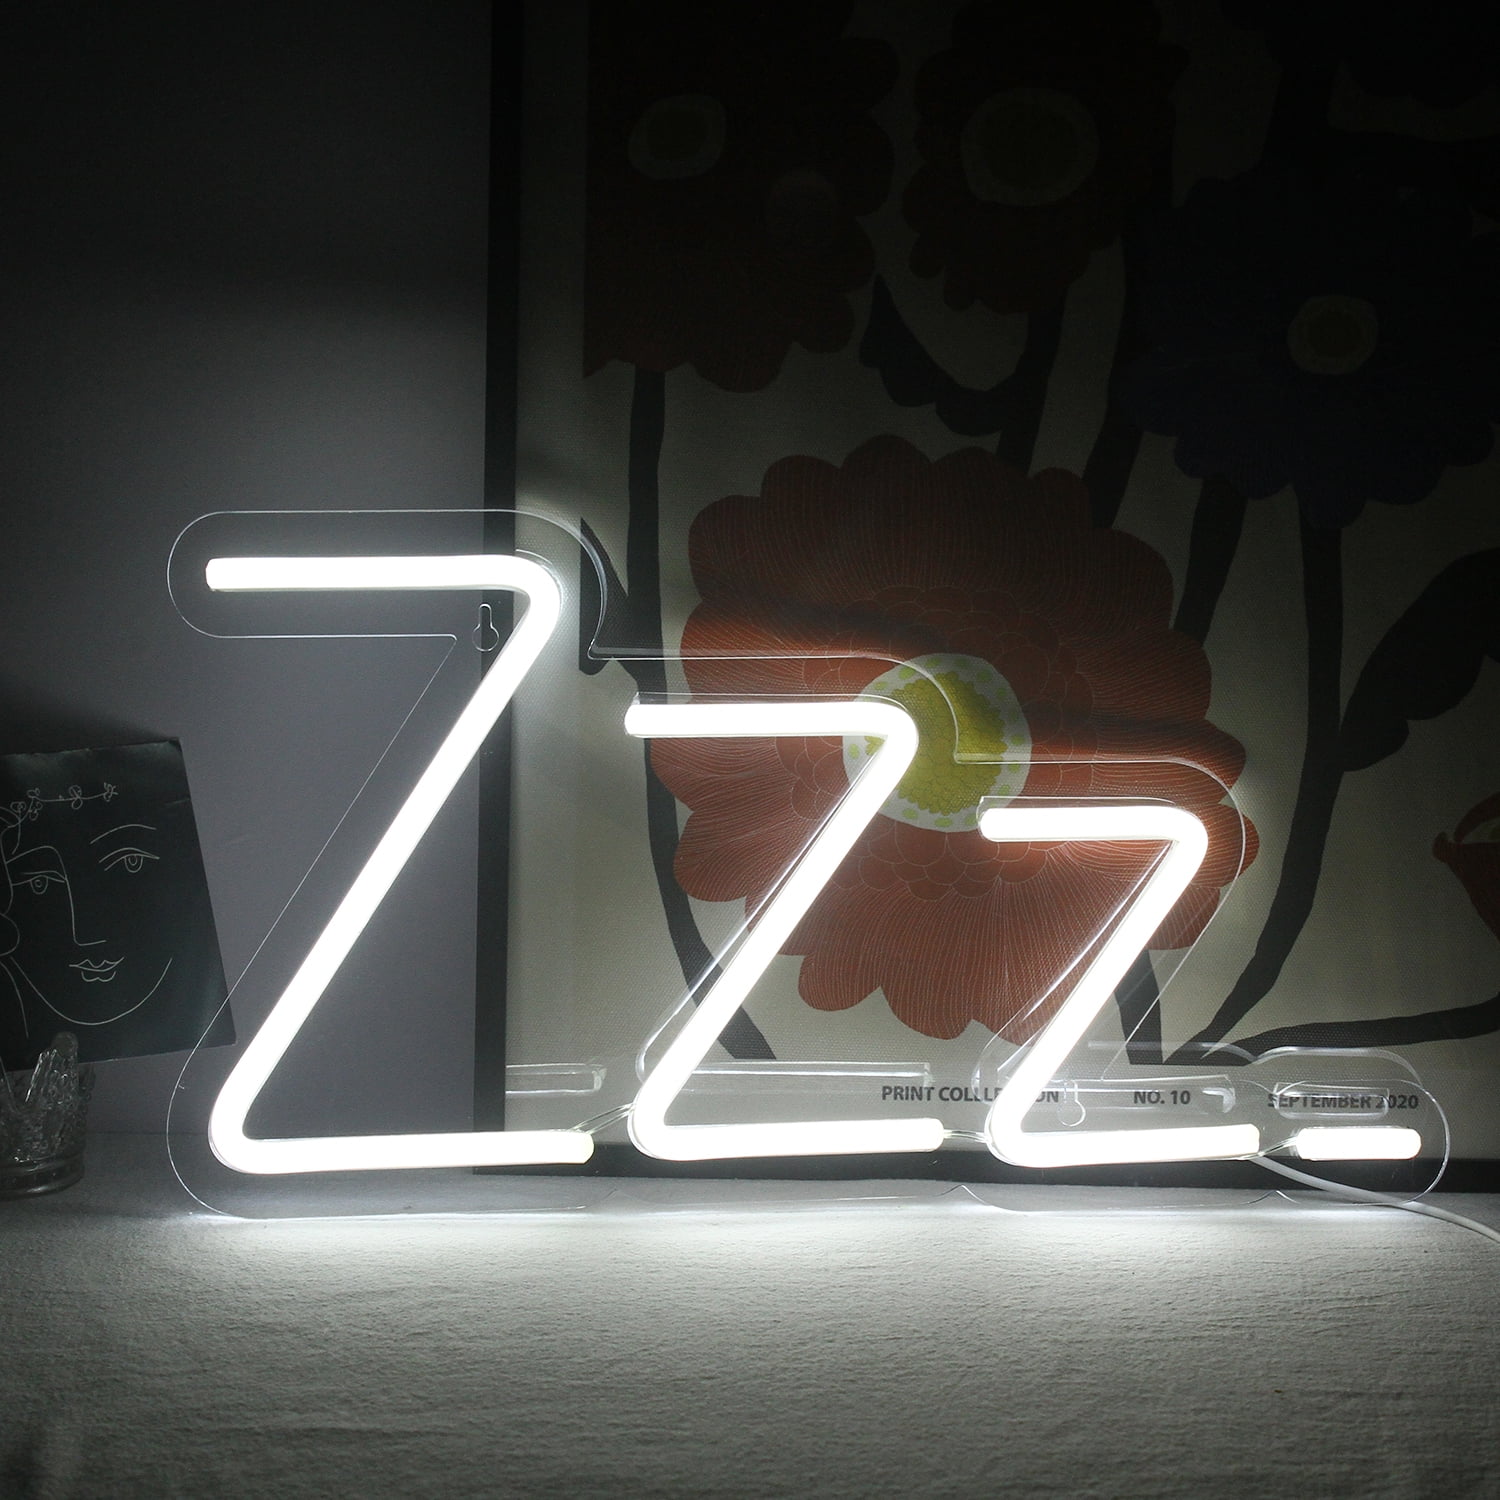 Boghandel En nat Medicinsk malpractice Wanxing Zzz Sleep LED Neon Light Signs USB Power for Home Bar Party Bedroom  Wall Decoration - Walmart.com